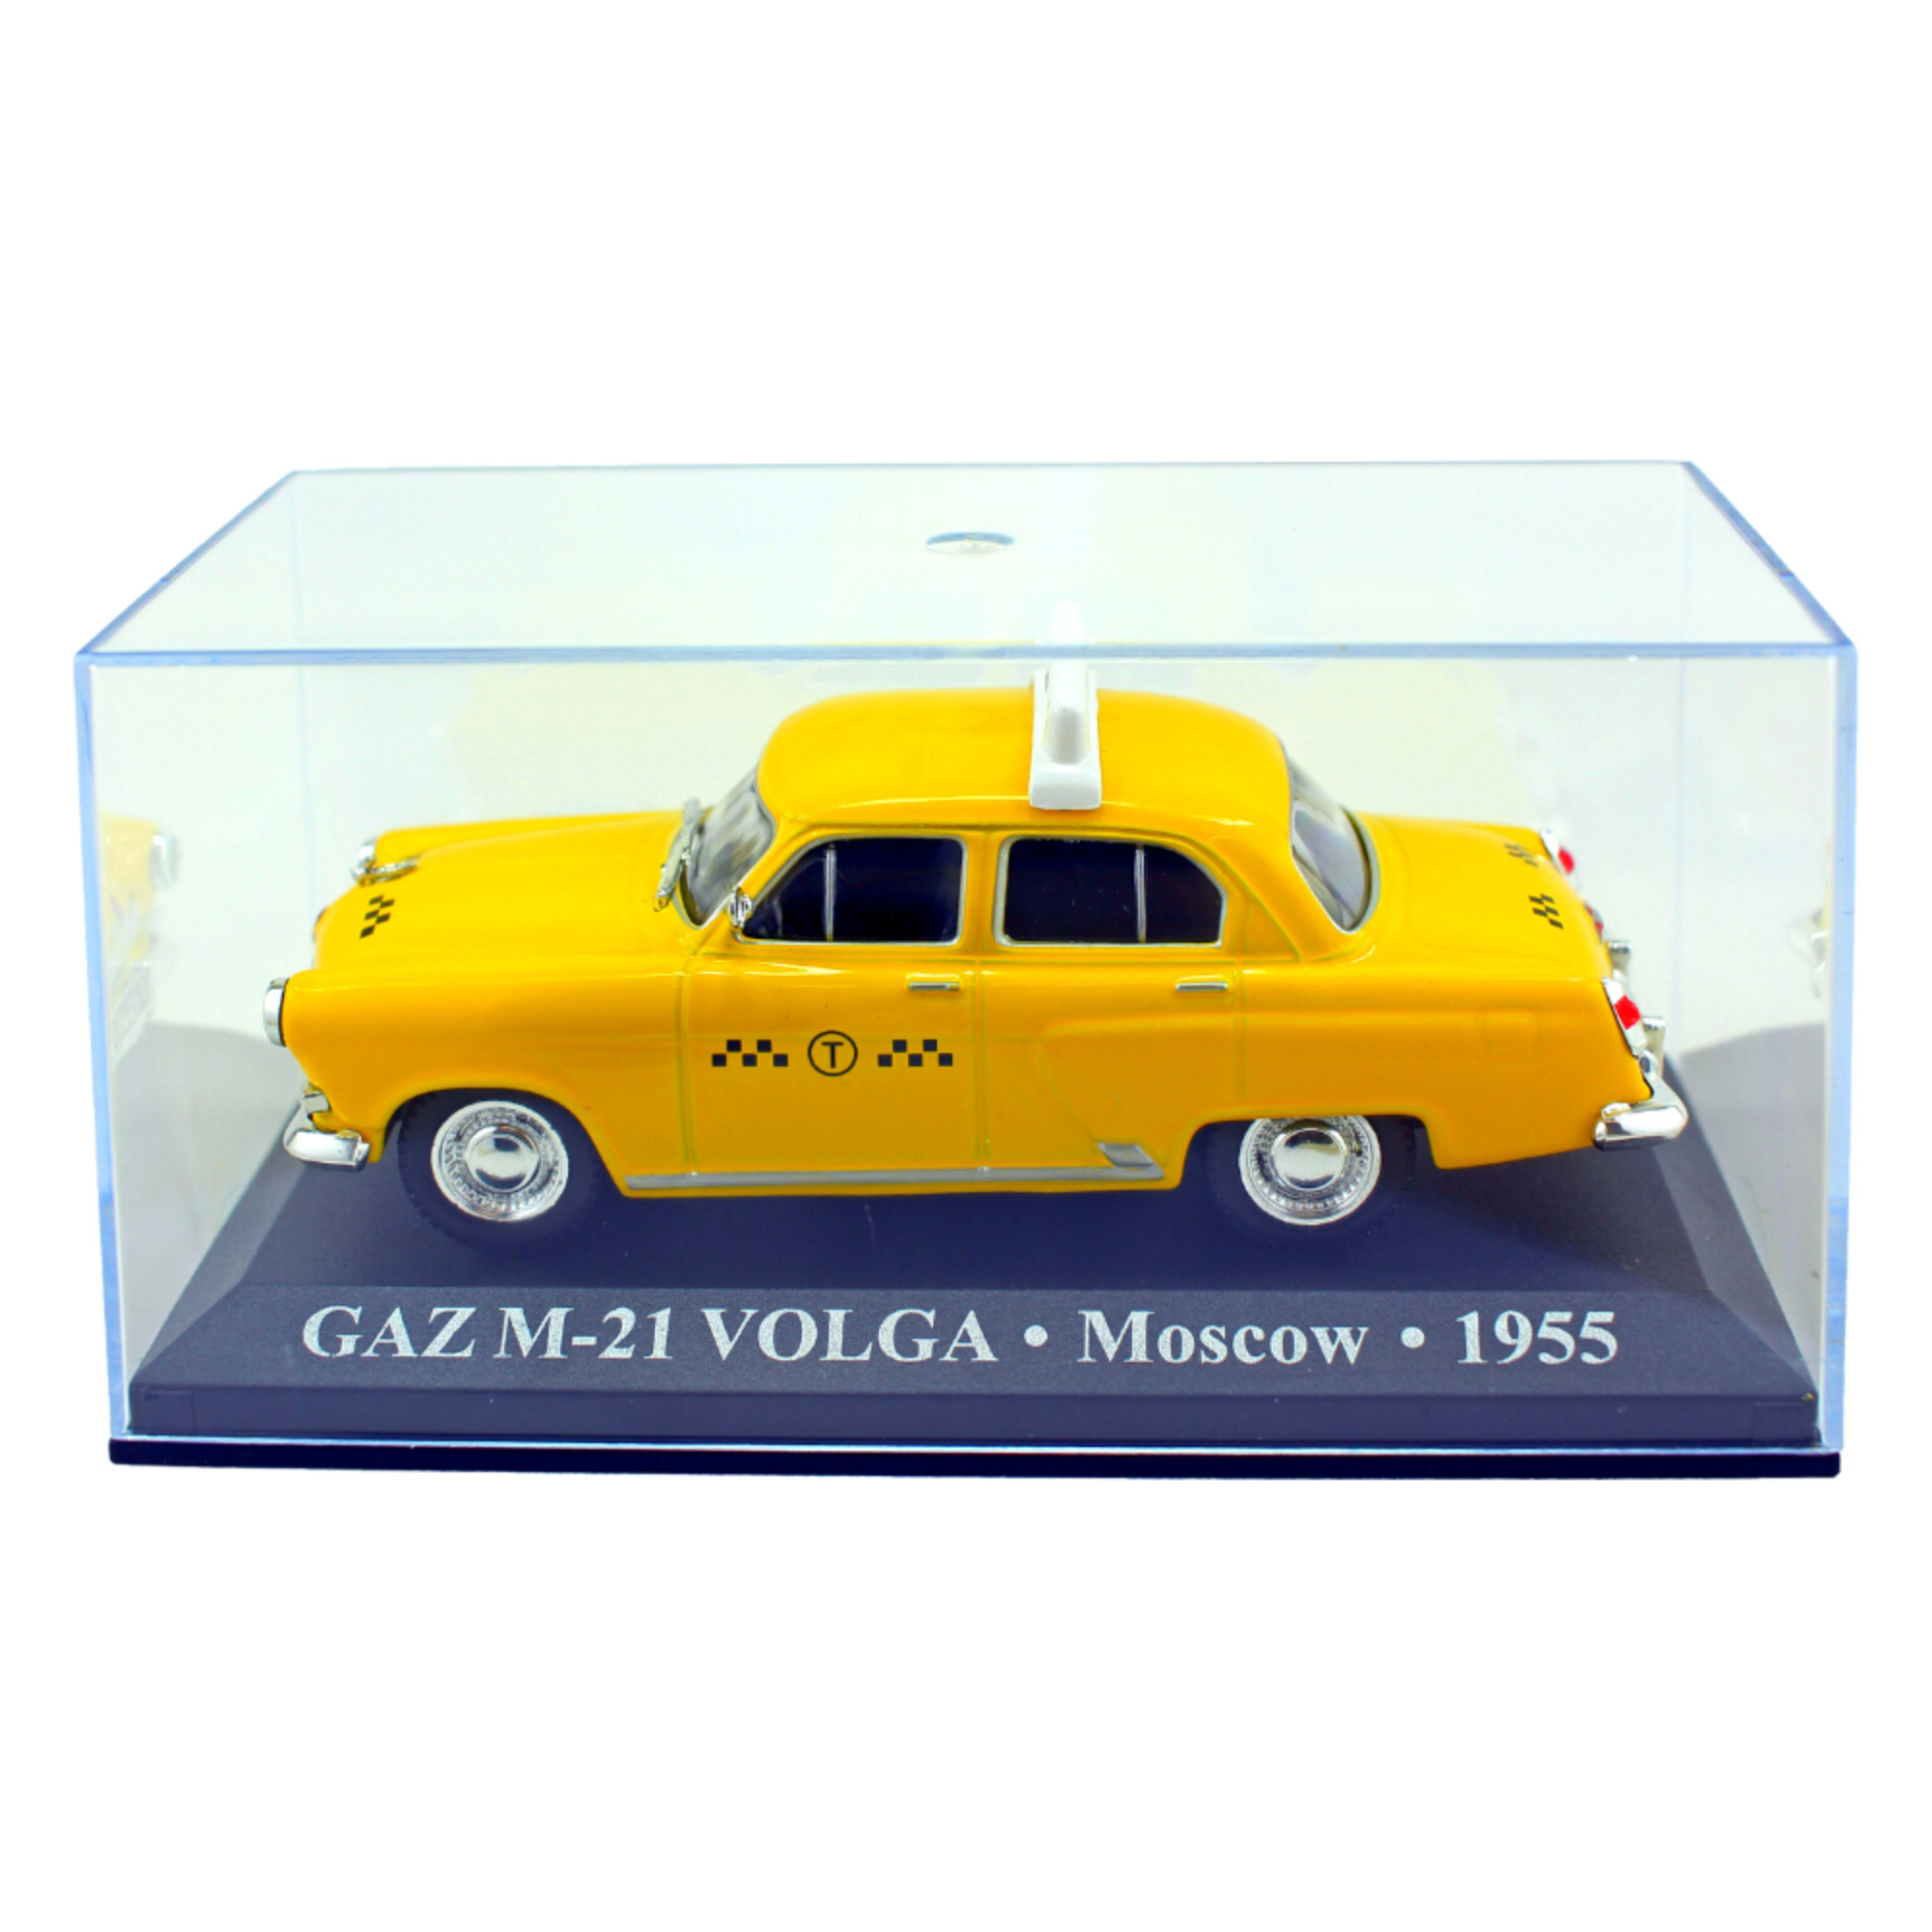 1955 Gaz M-21 Volga Moscow Taxi Car 1/43Rd Scale Russian Model Example R0154X - Toptoys2u